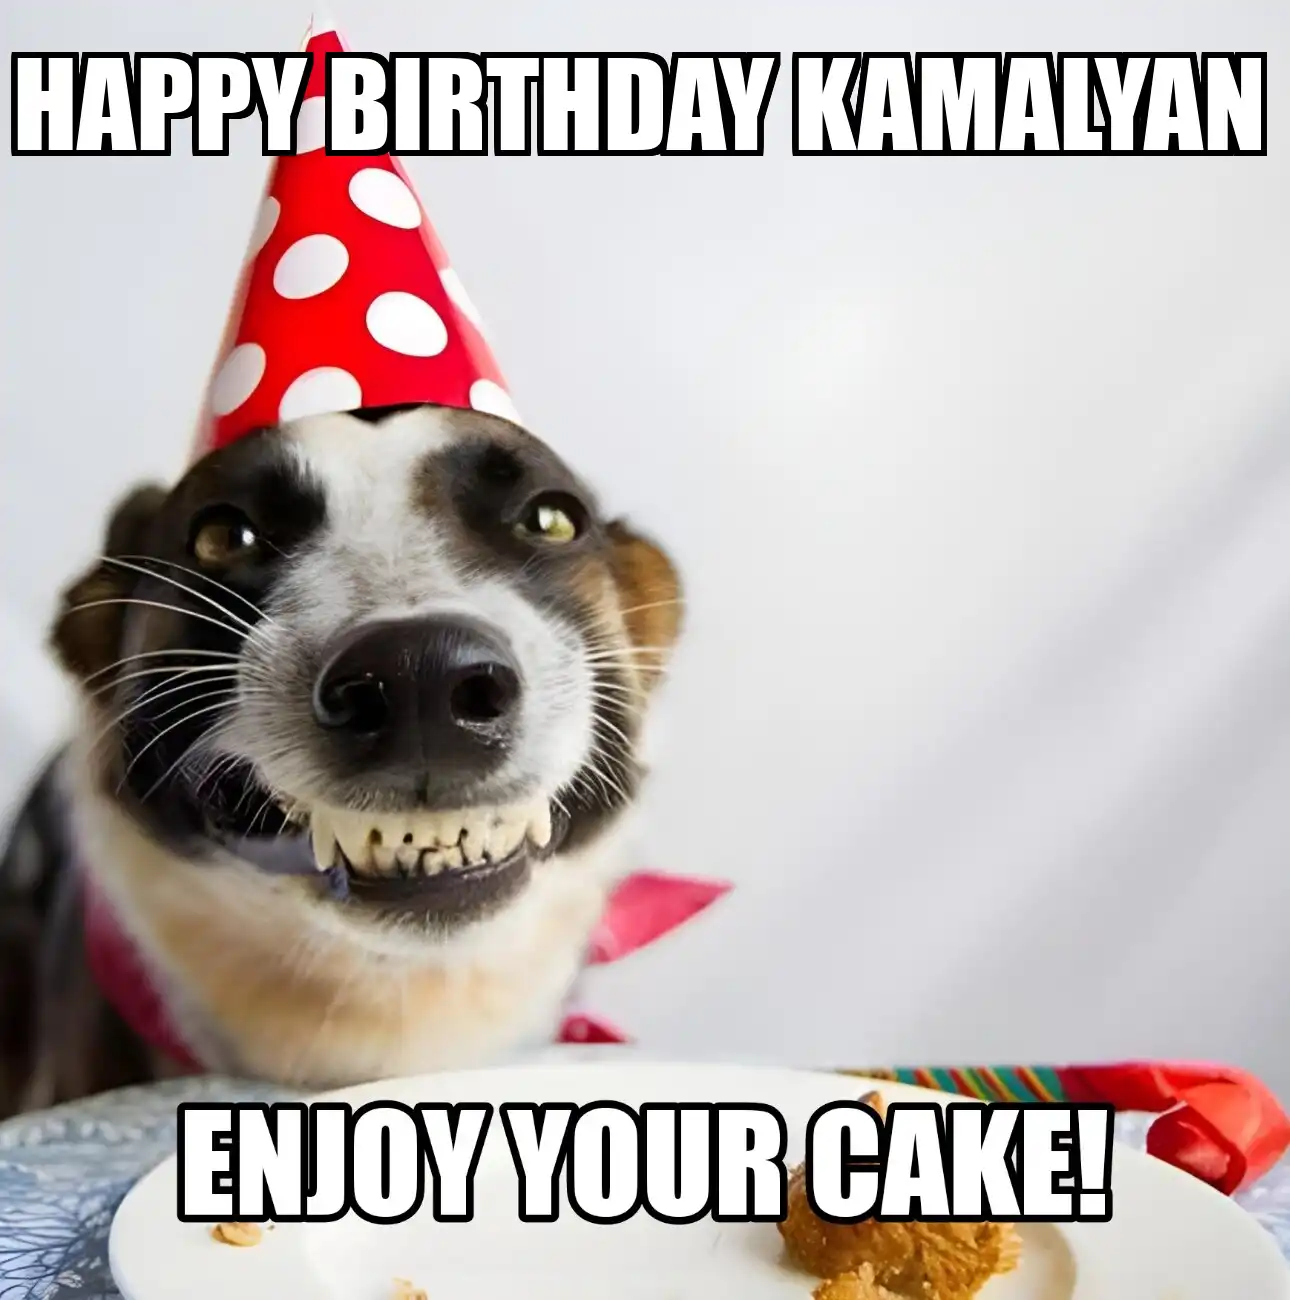 Happy Birthday Kamalyan Enjoy Your Cake Dog Meme